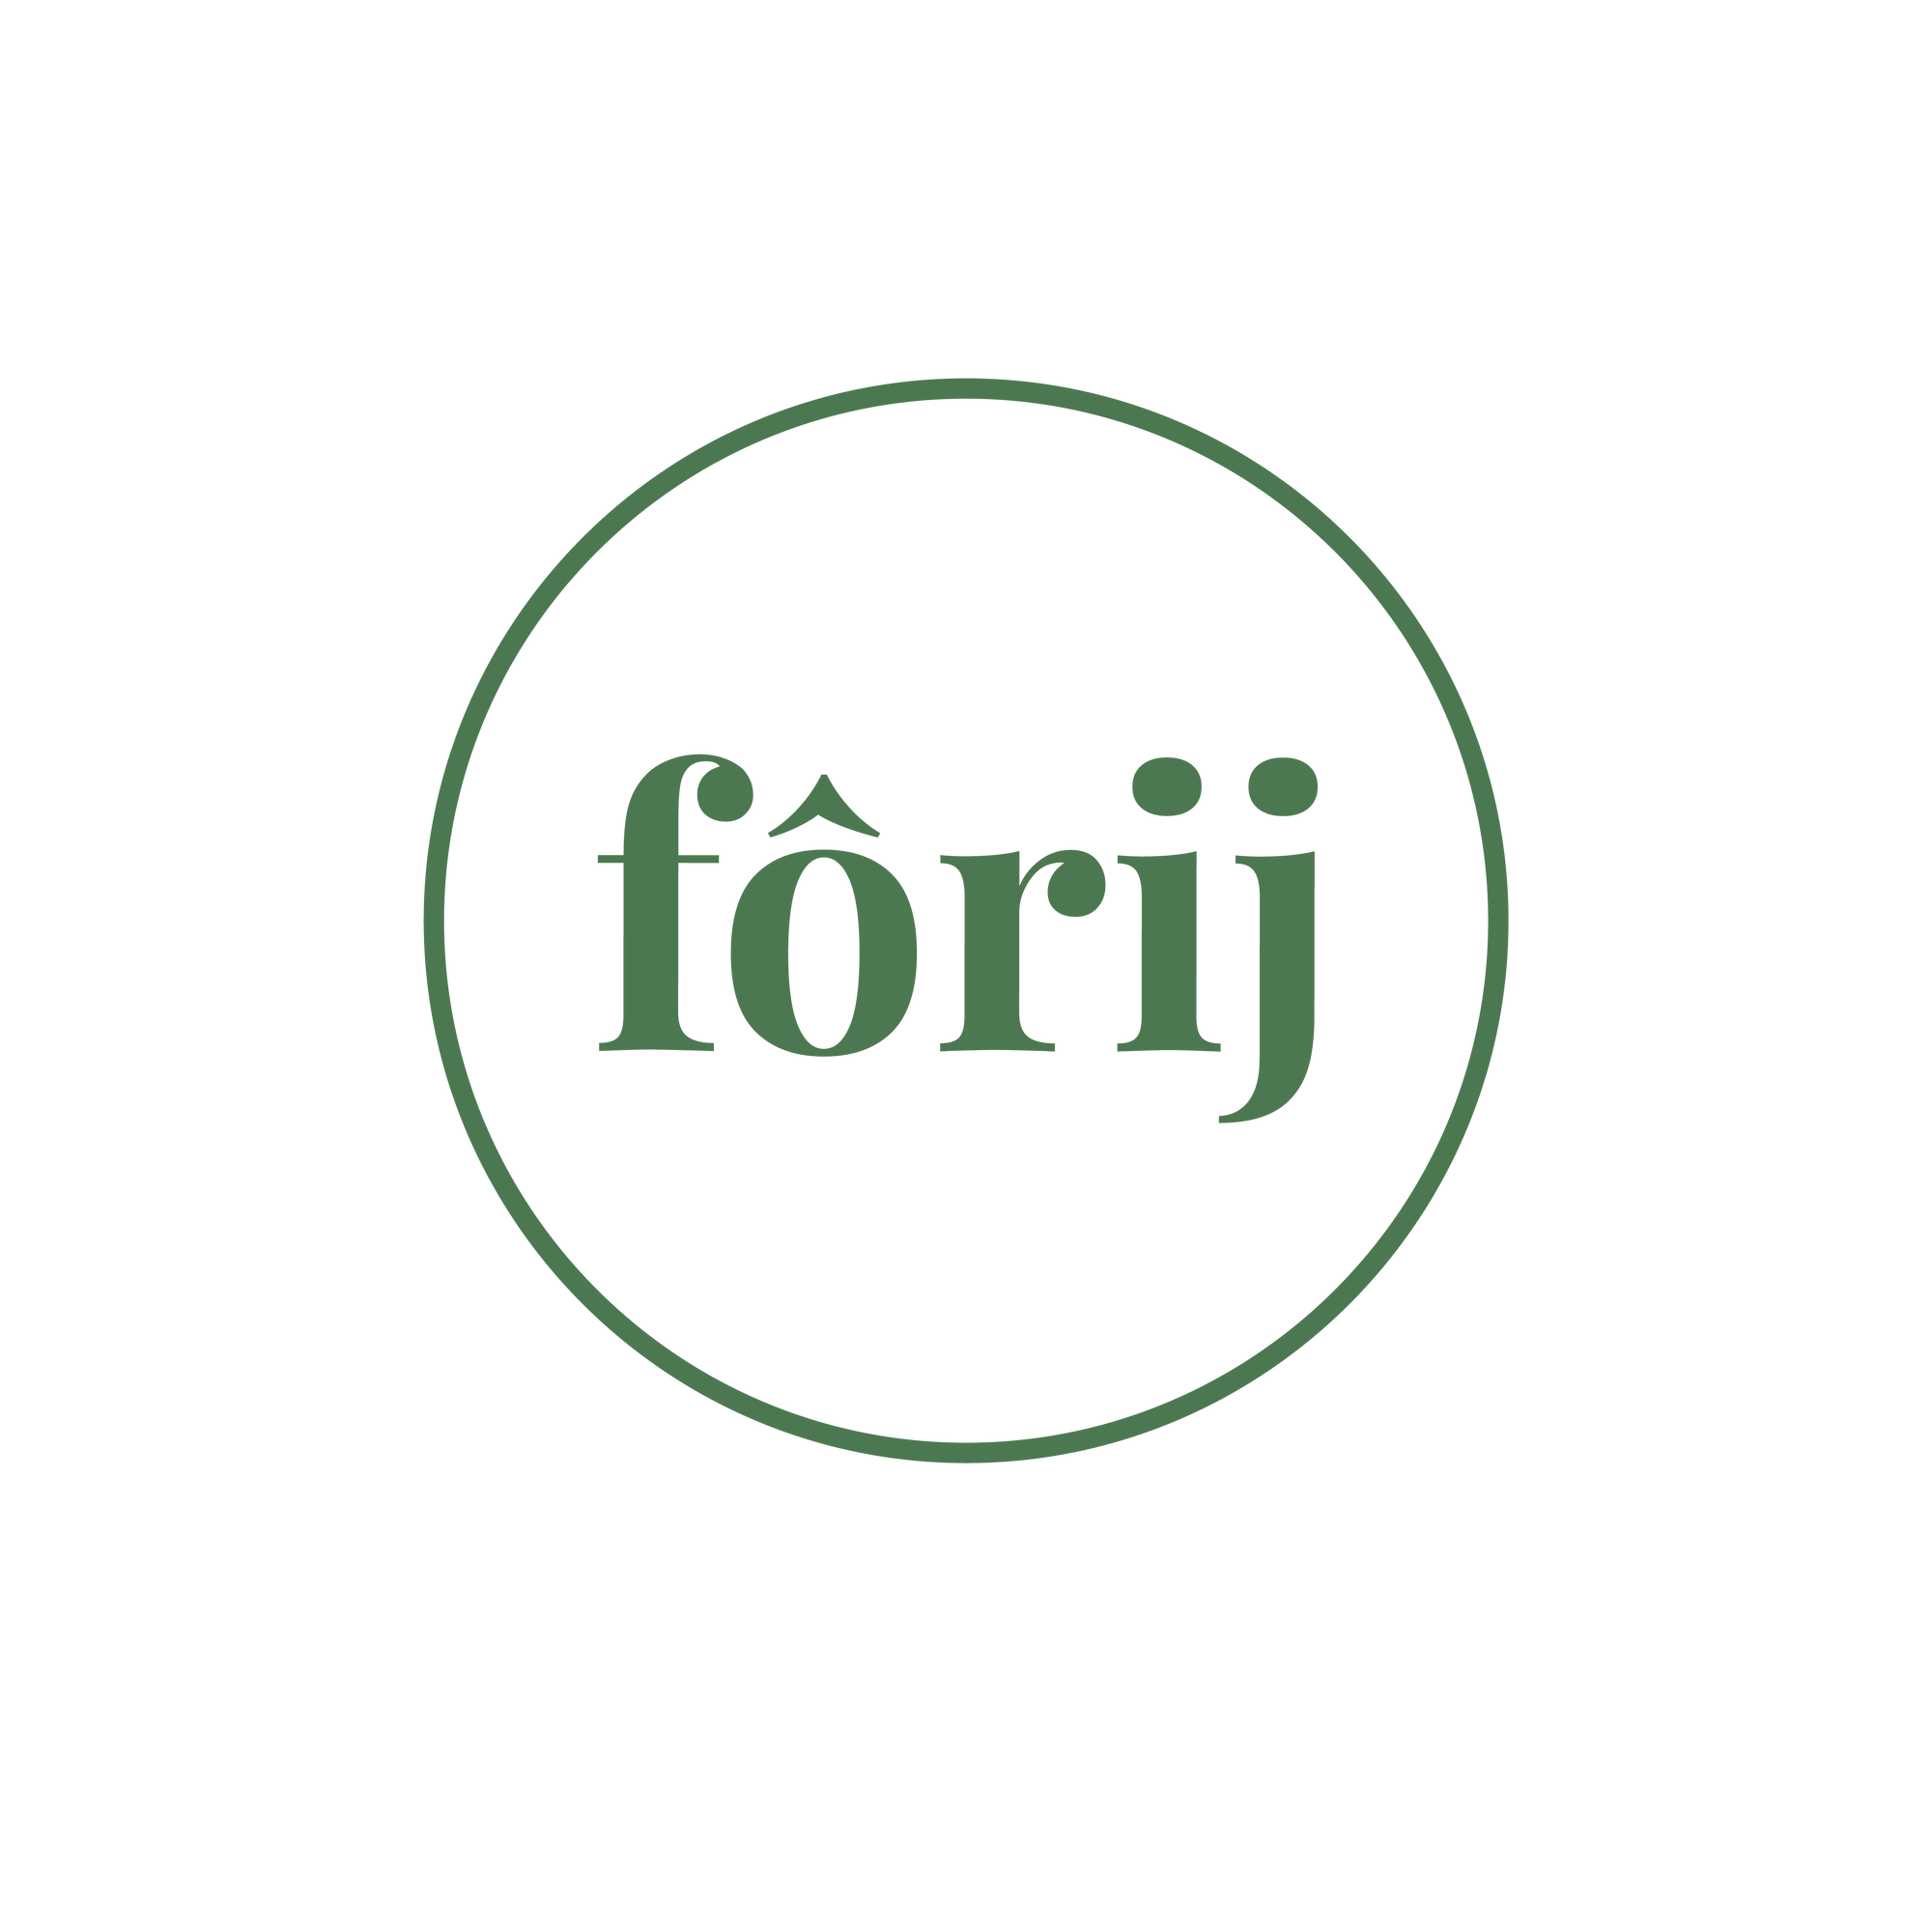 Forji or Forgi or Forig? It’s Forij! - Forij.co